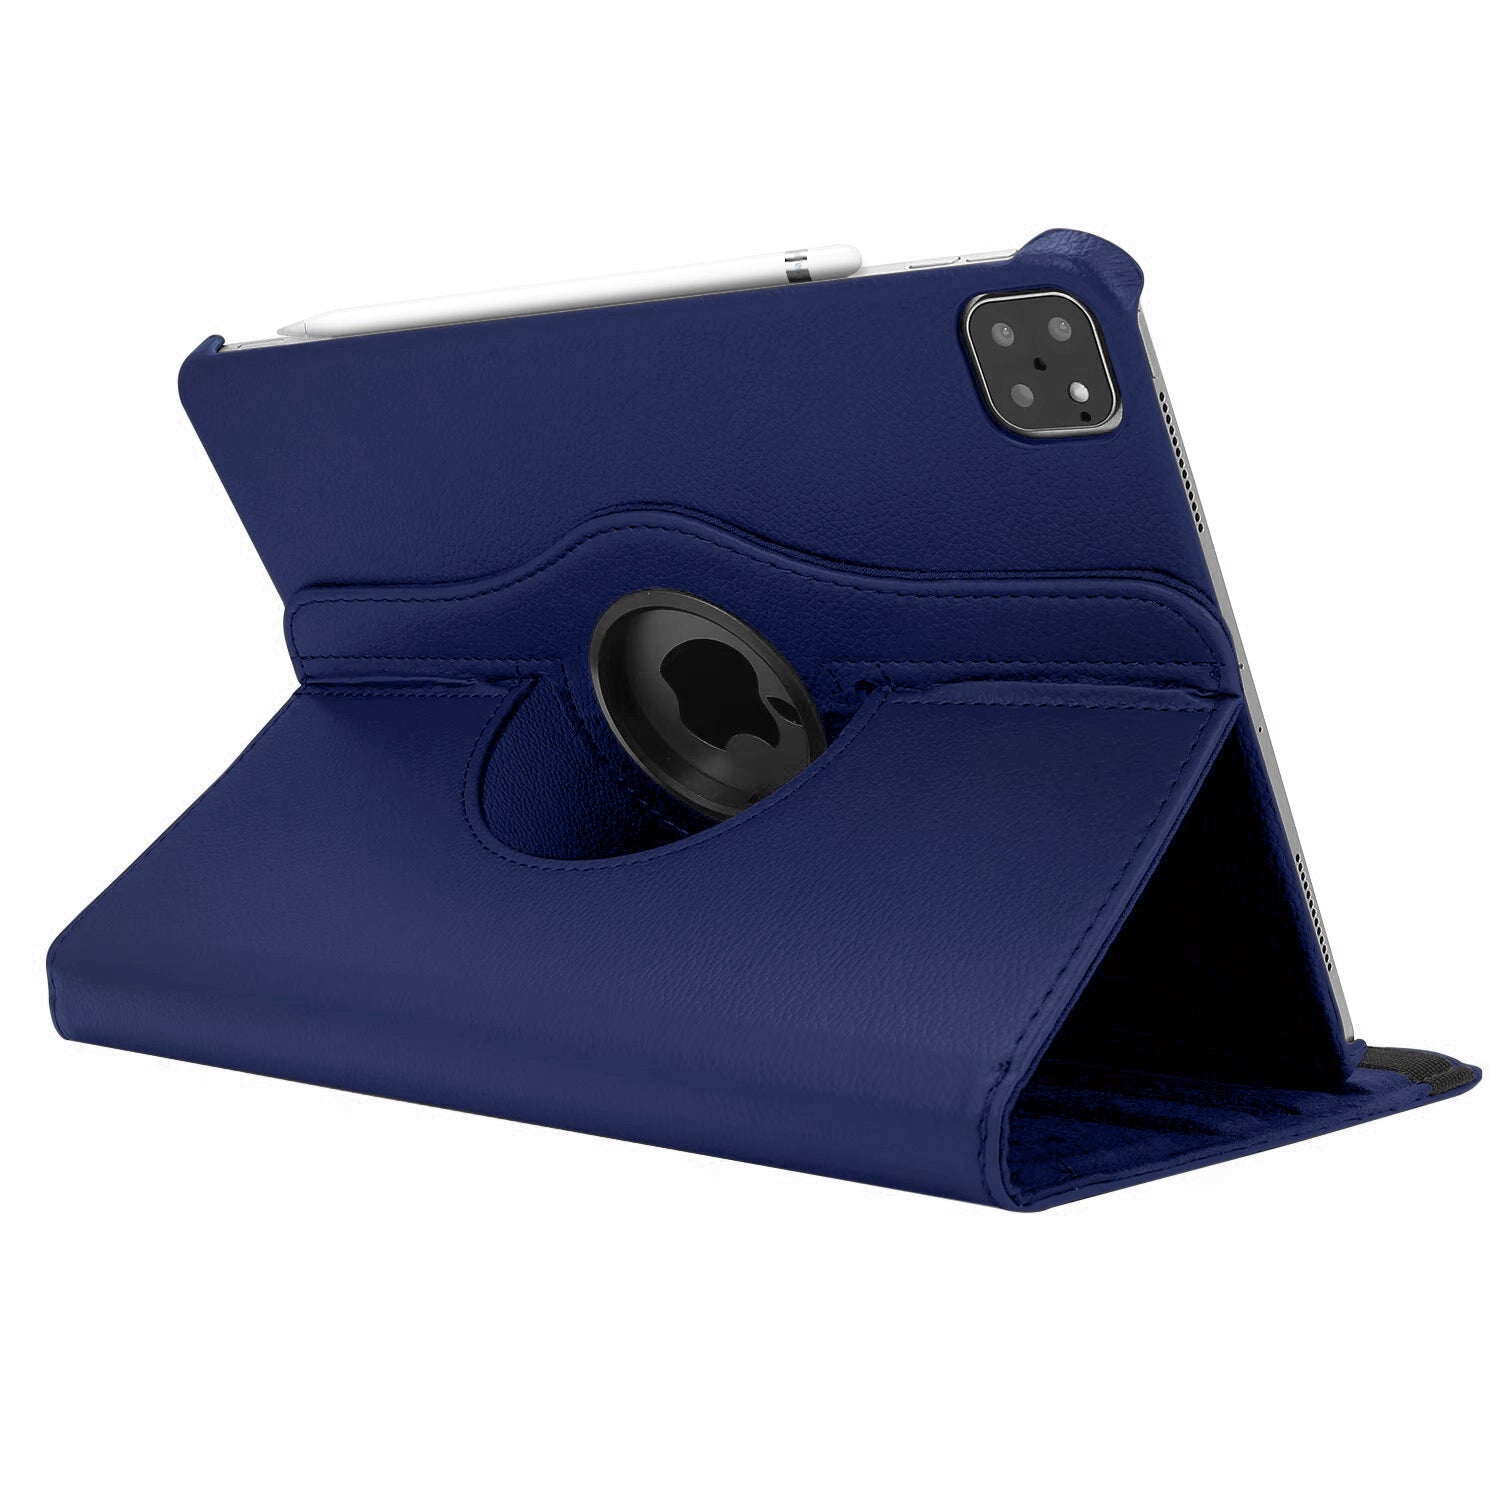 iPad Pro Case, Leather iPad Case